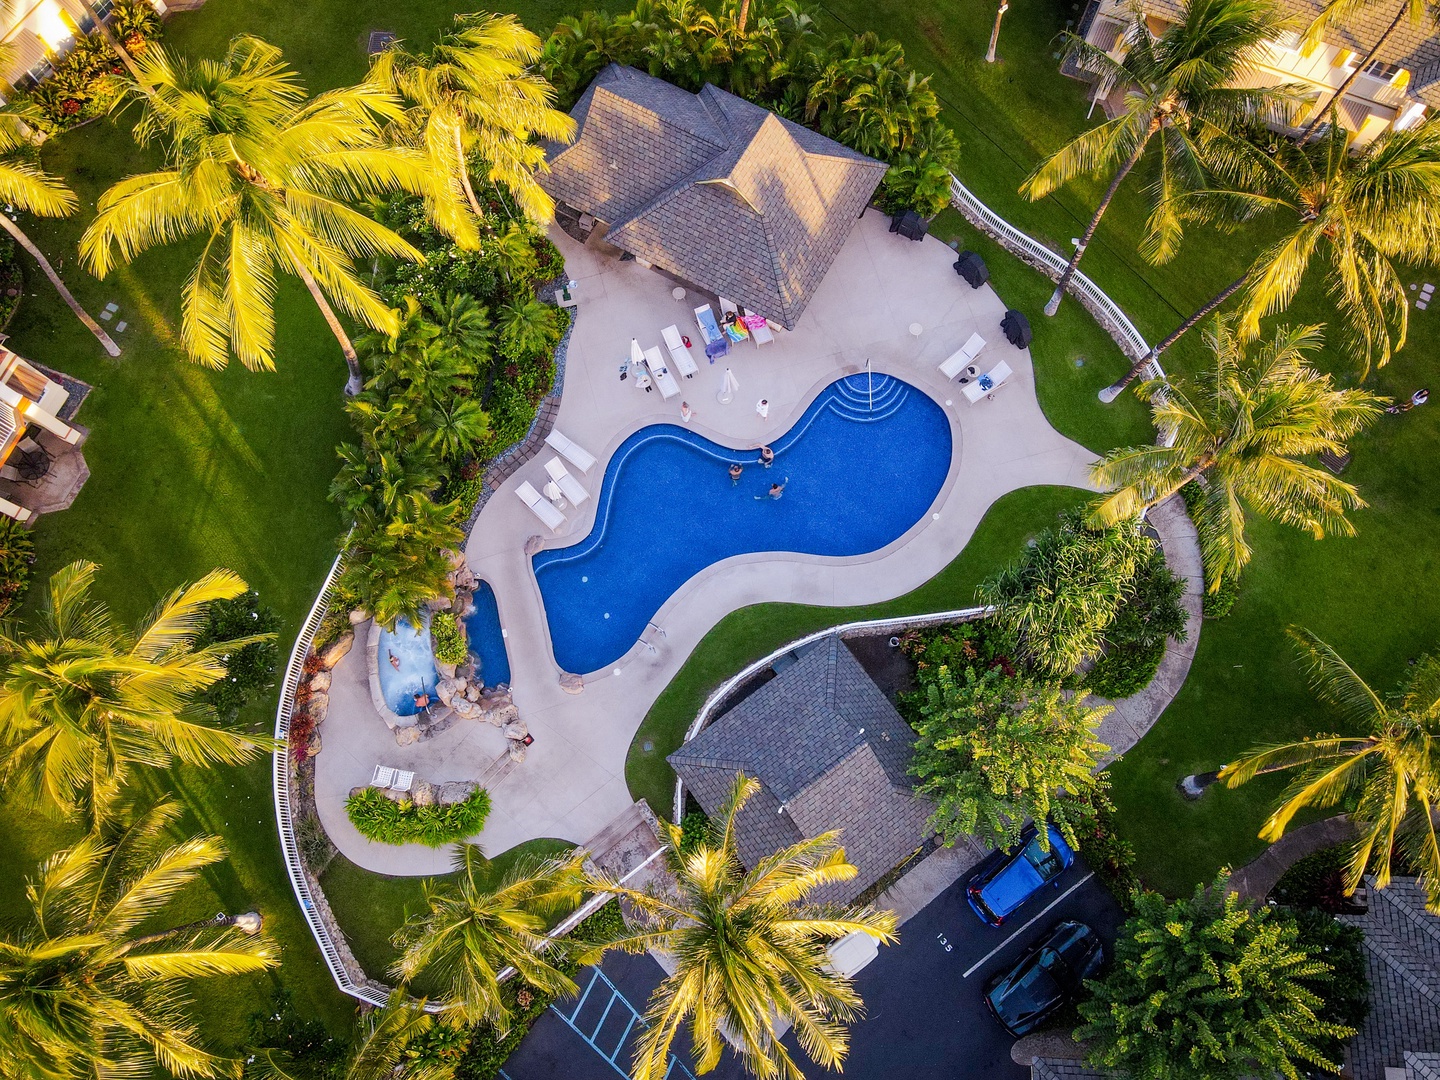 Kapolei Vacation Rentals, Kai Lani 8B - Kai Lani pool area surrounded by swaying palms.